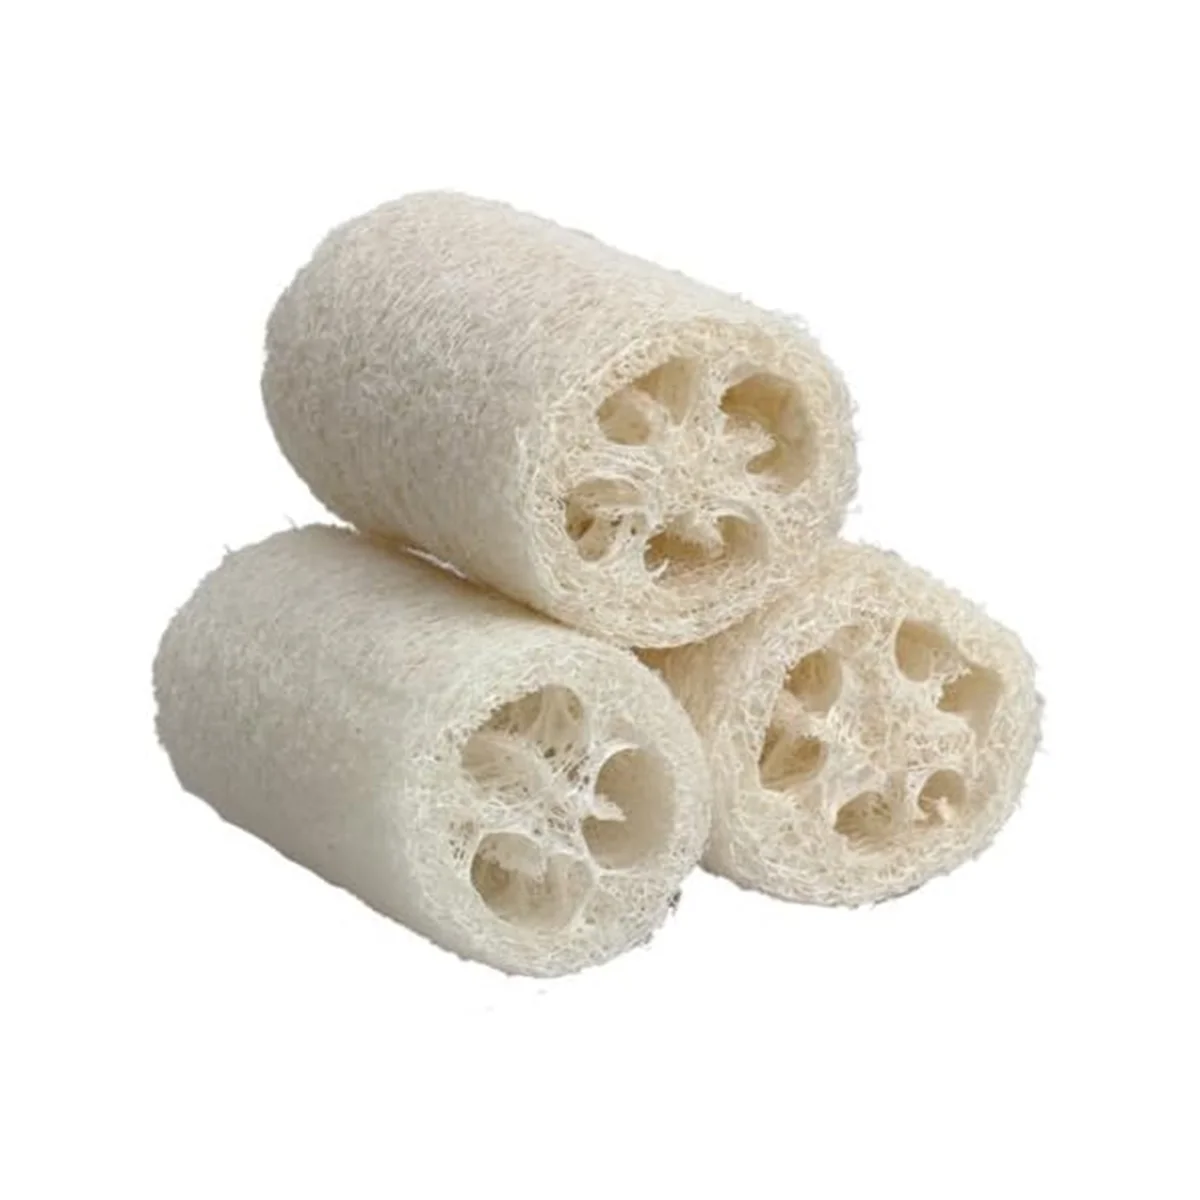 

50PcsNatural Loofah Exfoliating Body Shower Loofah Sponge,Premium Exfoliating Biodegradable Loofah